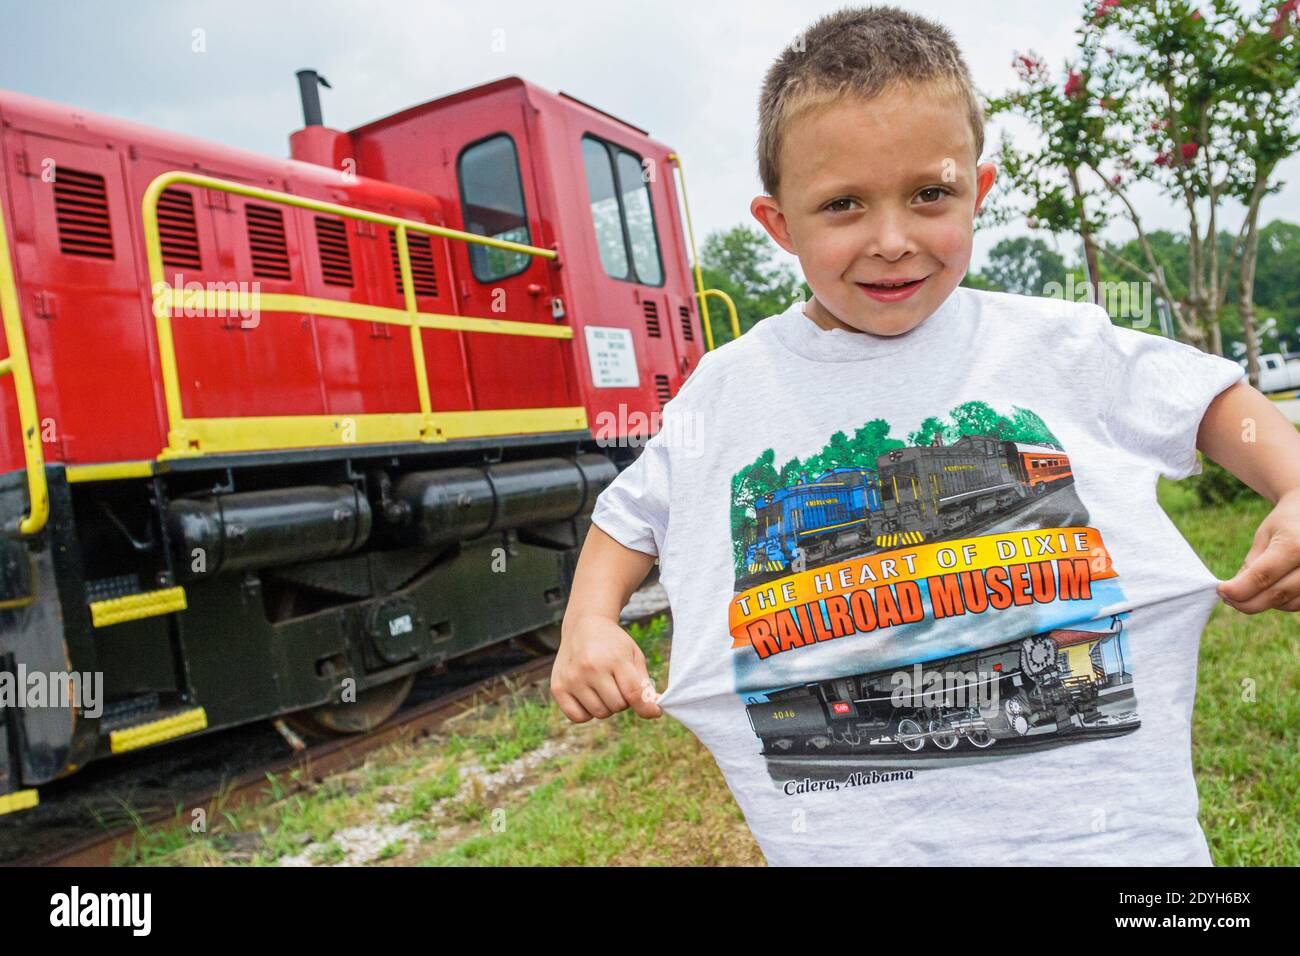 Alabama Calera Heart of Dixie Railroad Museum,boy kid child visitor caboose train holding souvenir tee shirt, Stock Photo